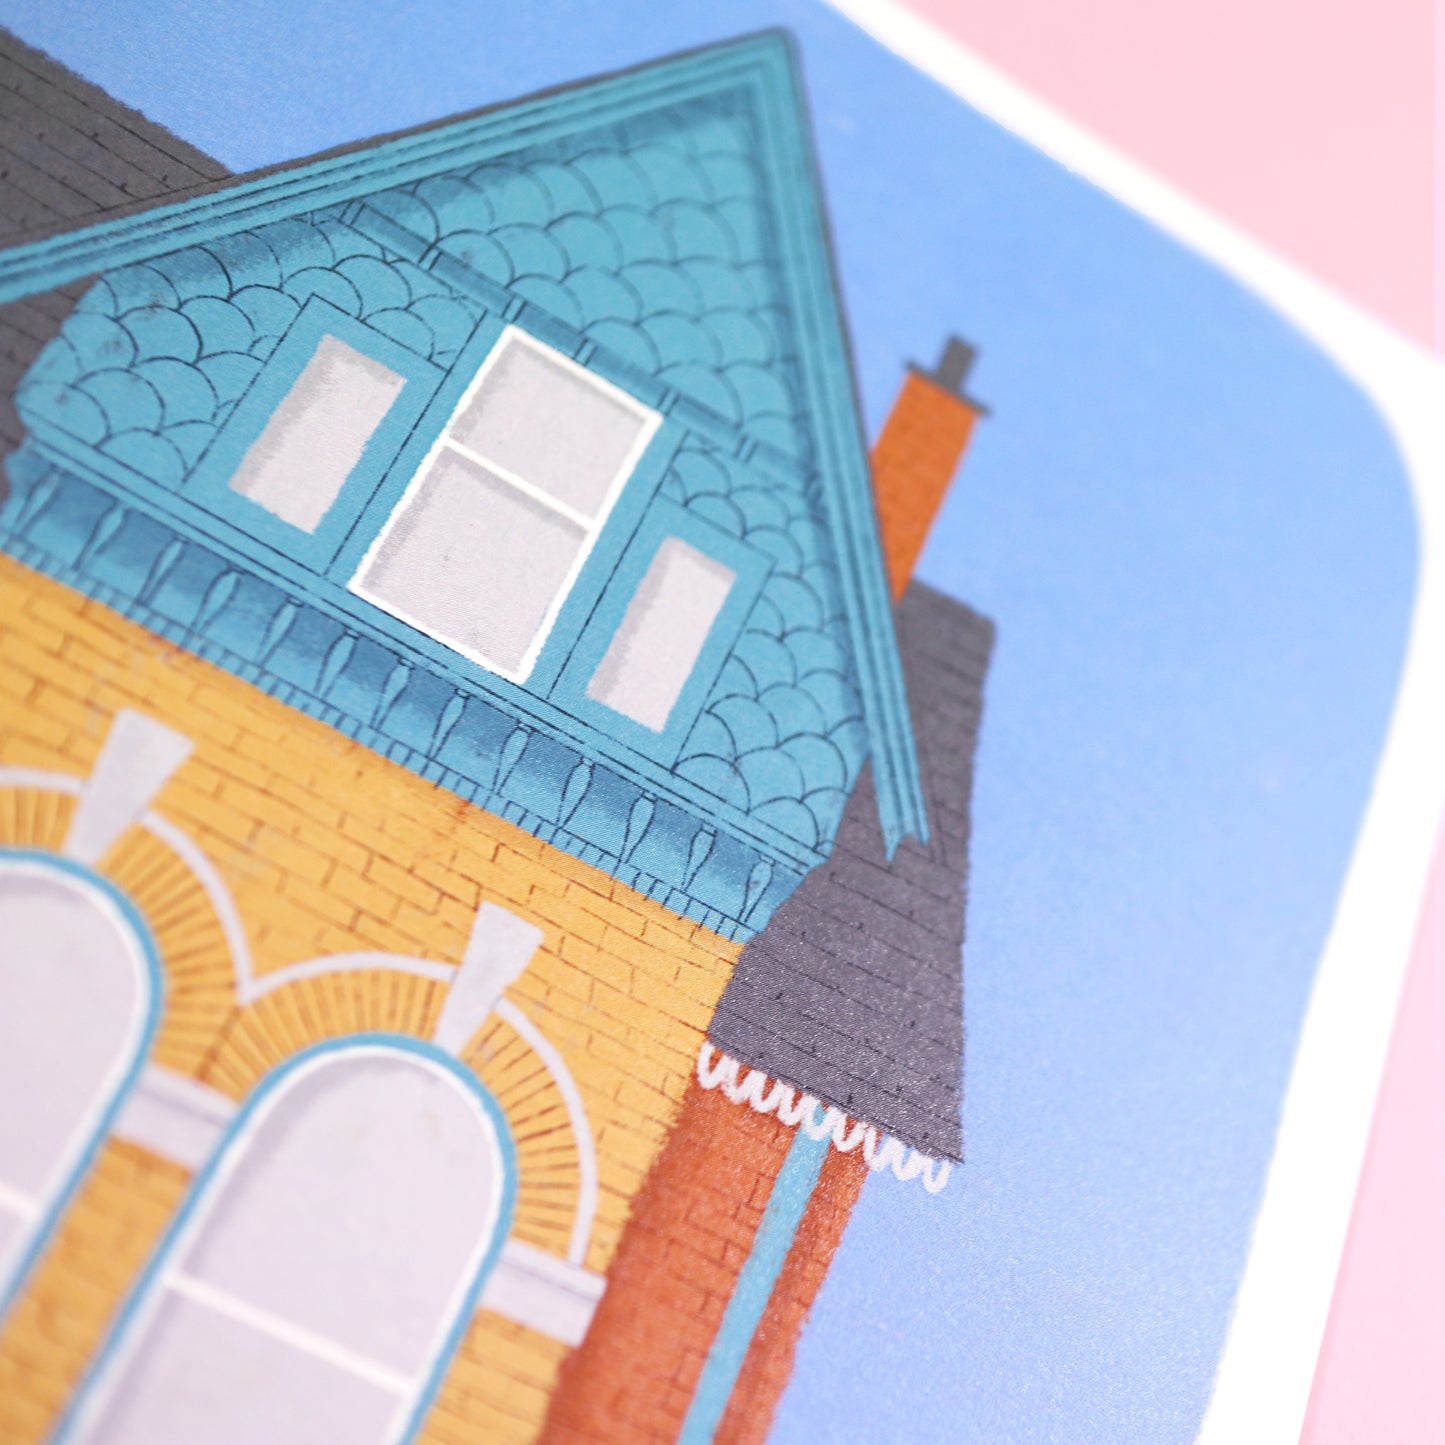 Victorian Houses Series — House Set A5 print